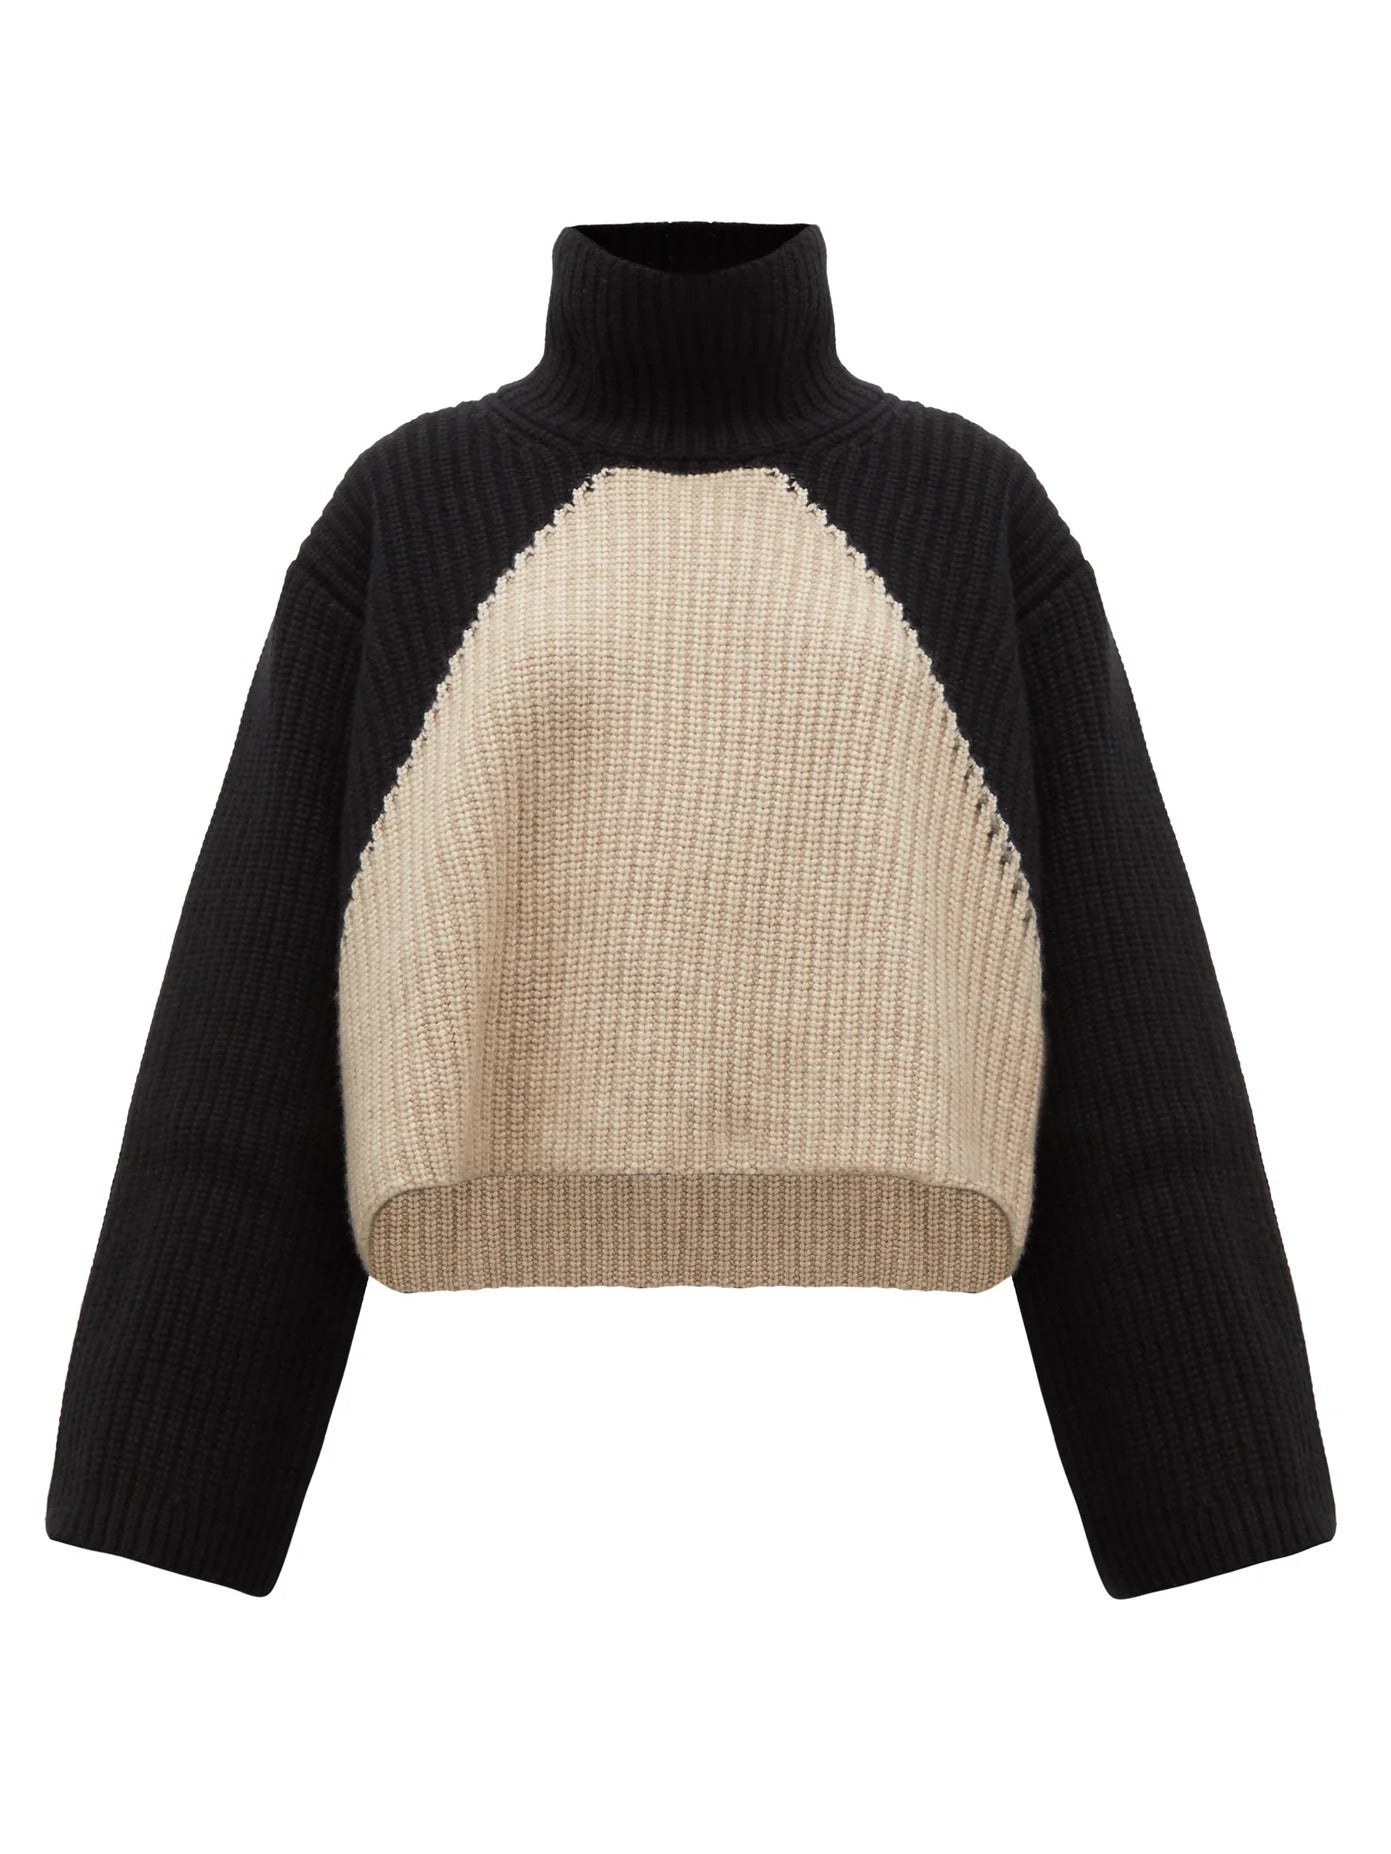 Khaite + Two-Tone Cashmere Roll-Neck Sweater